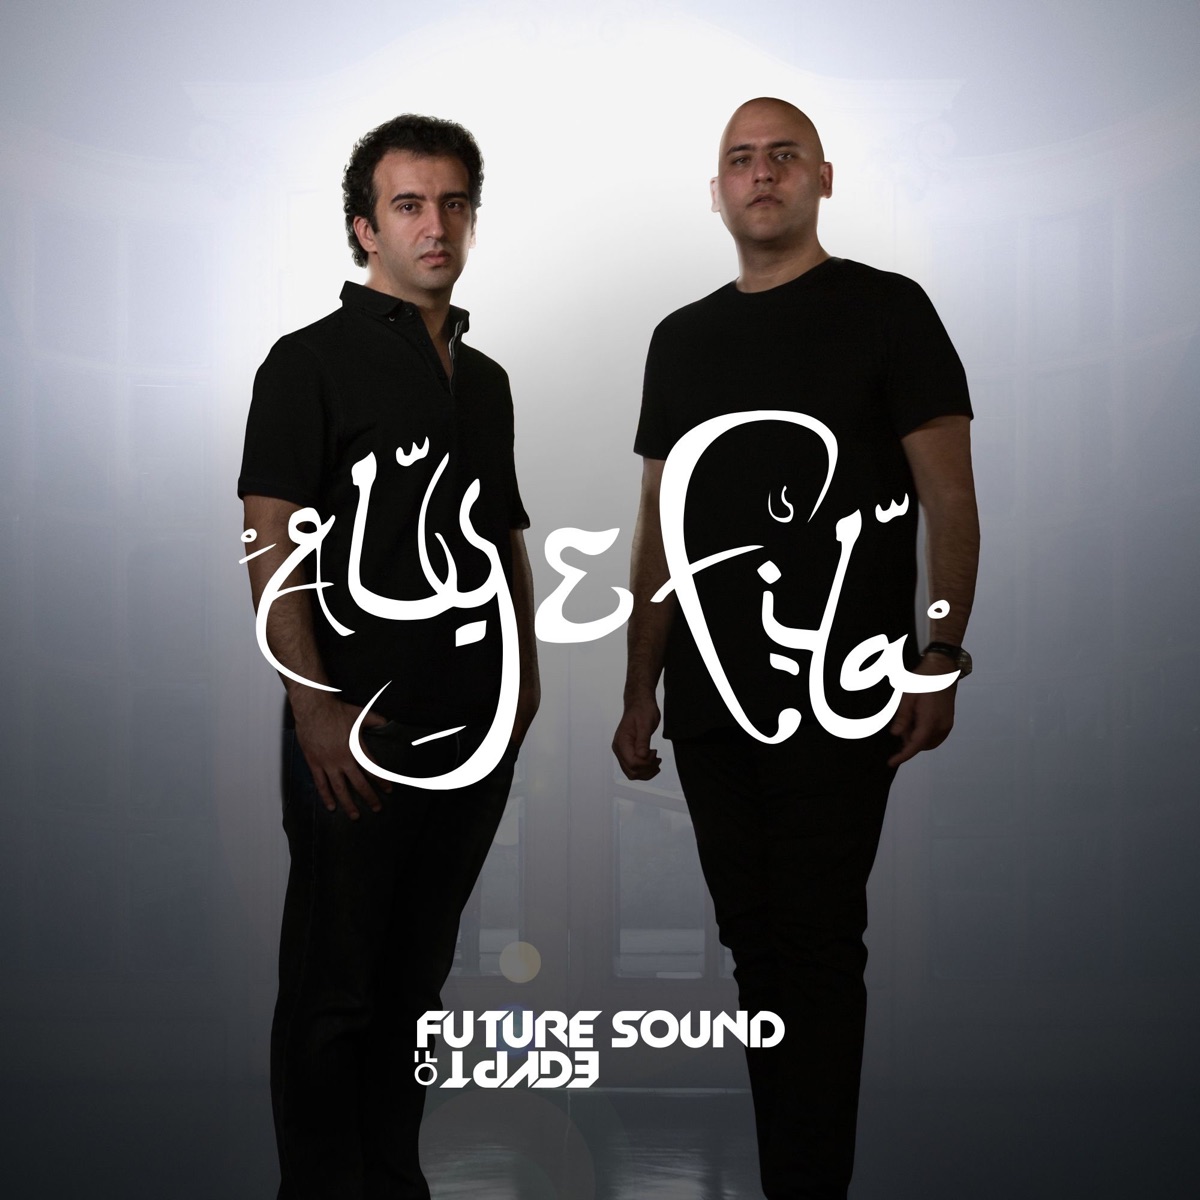 Aly & Fila pres. Future Sound Of Egypt Radio – Podcast – Podtail